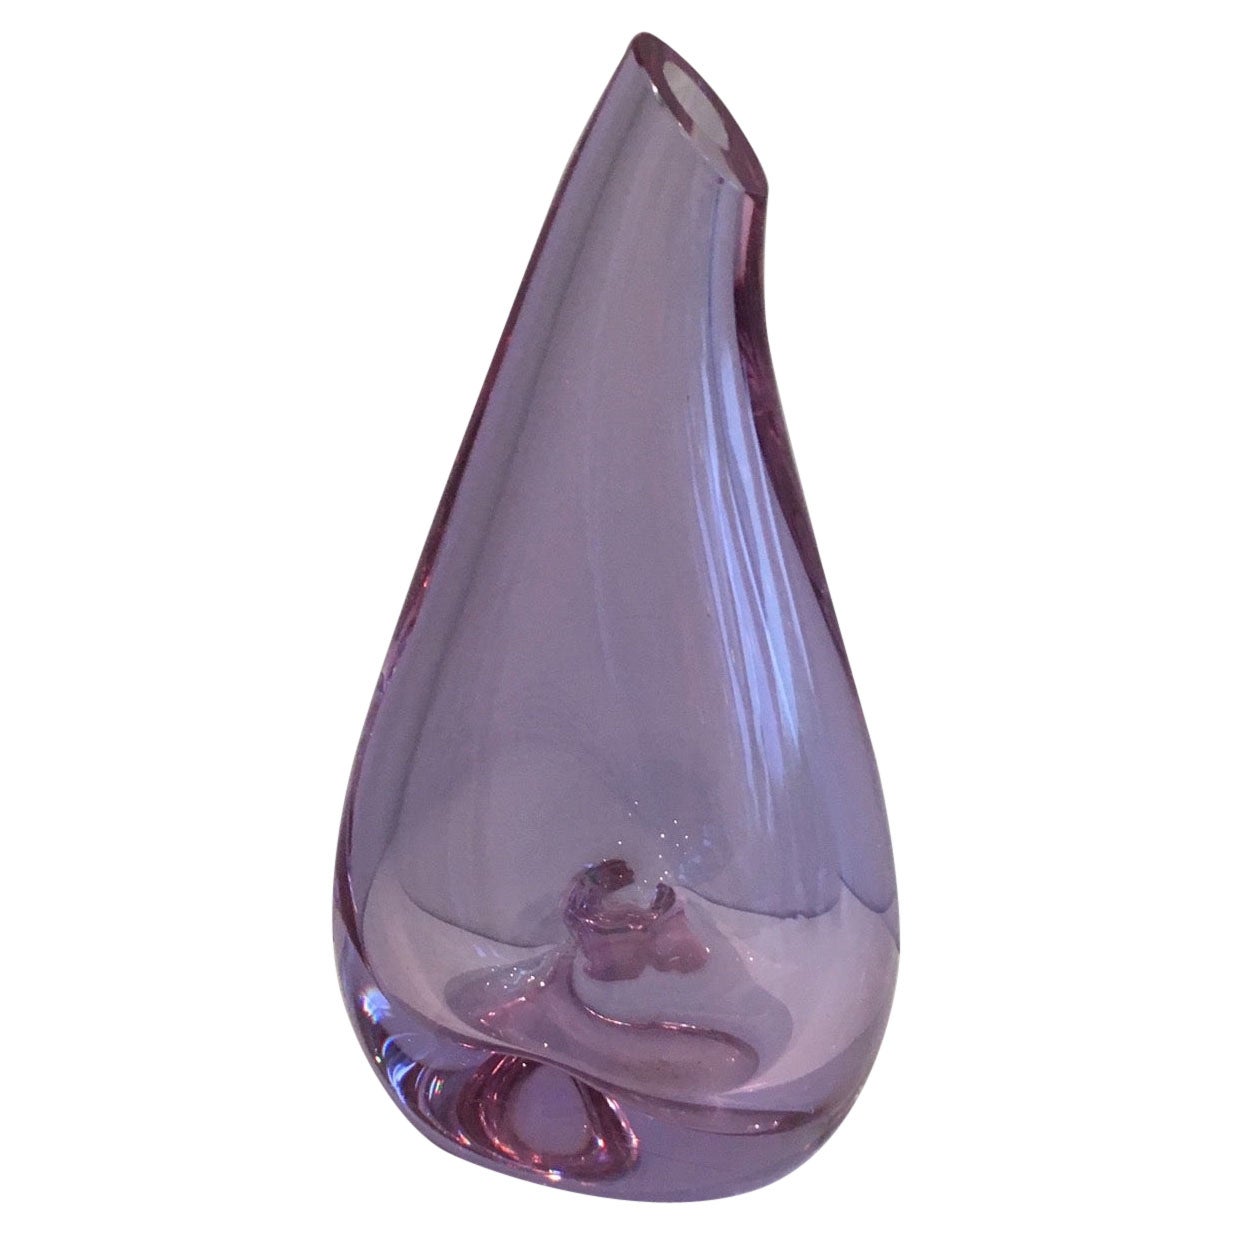 Glass Purplish-Colored Pear-Shaped Vase. French Work, Circa 1970